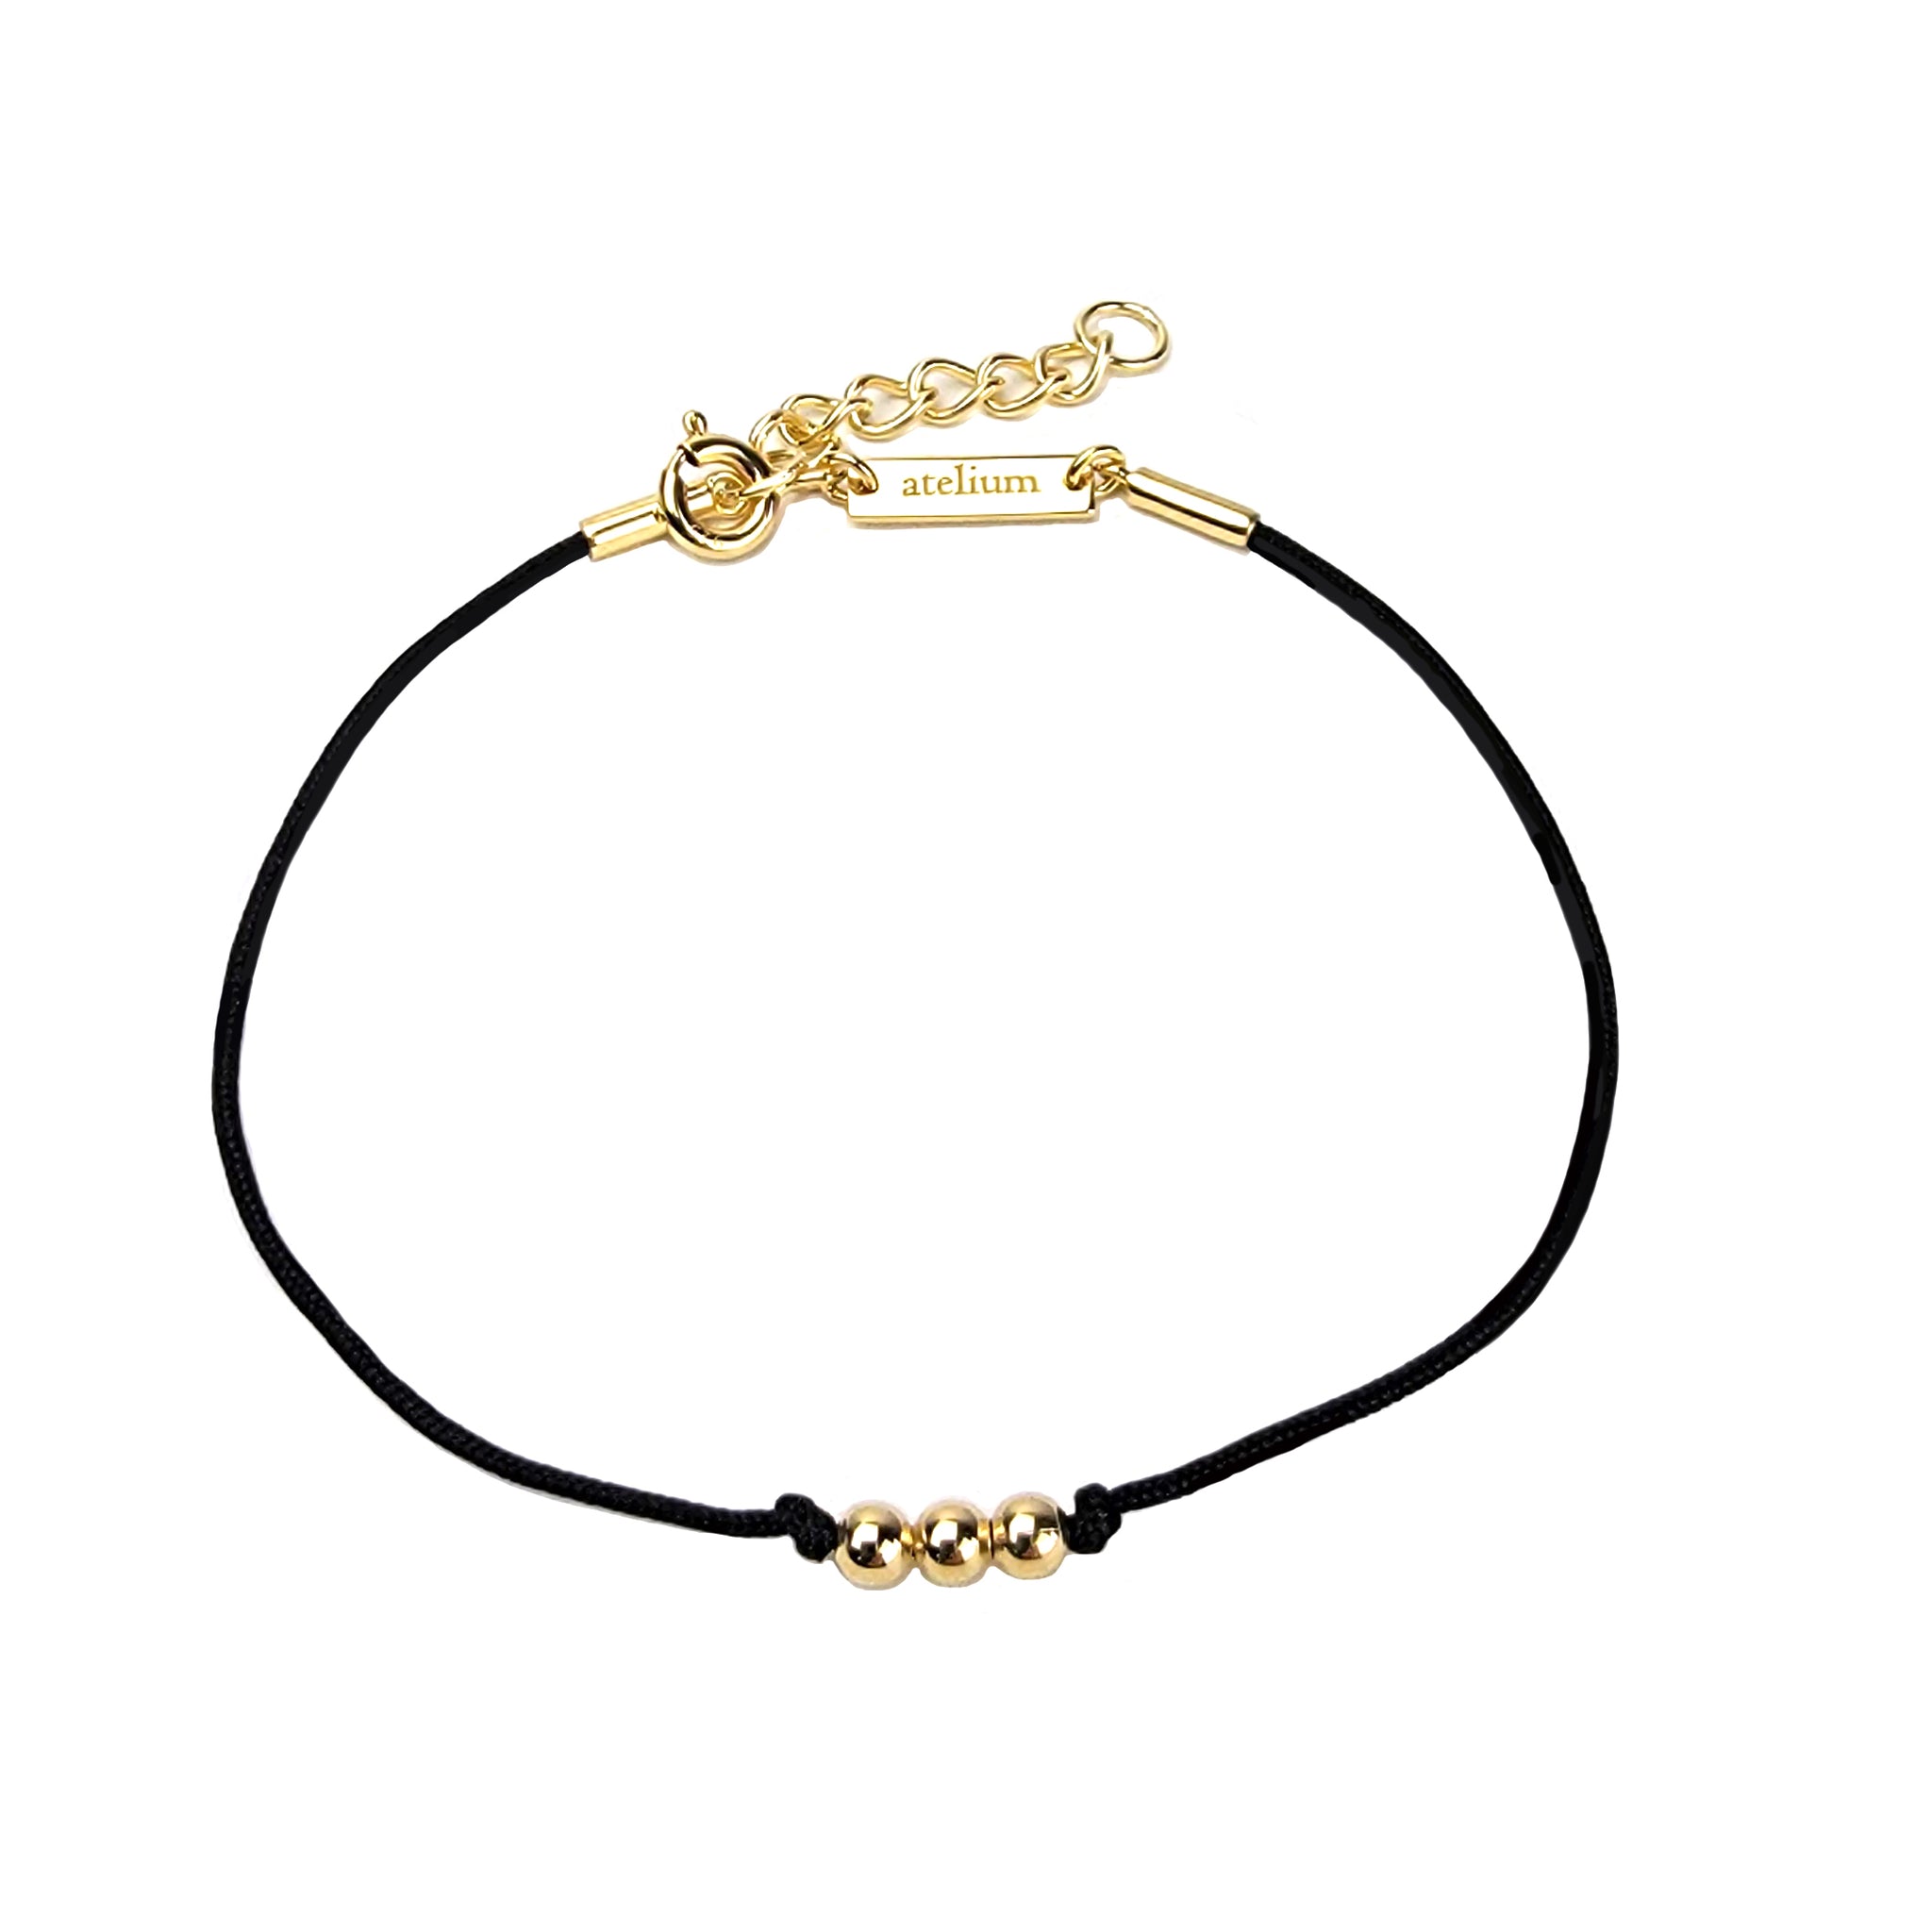 Black string bracelet with 3 gold beads